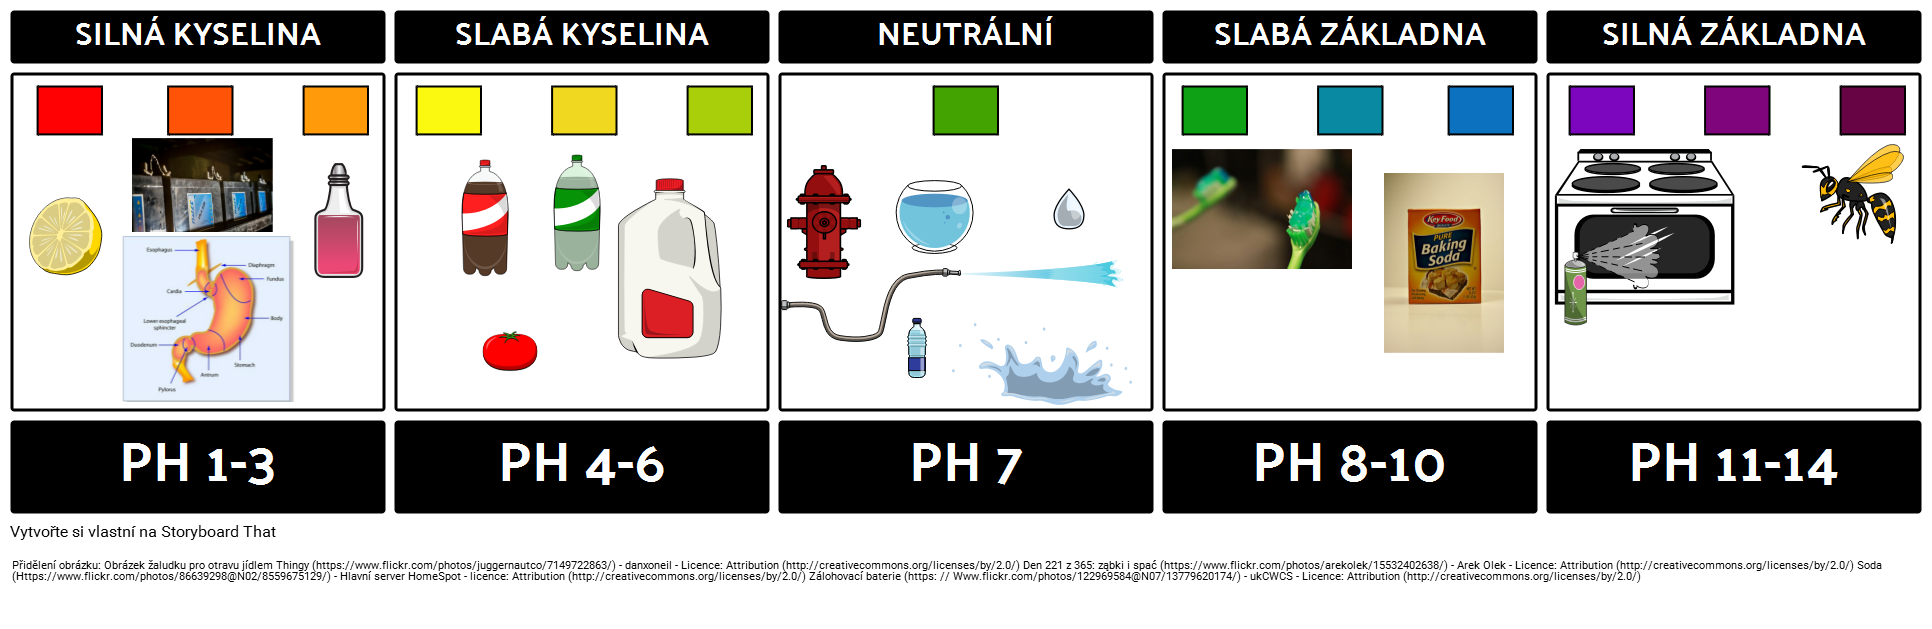 Stupnice pH